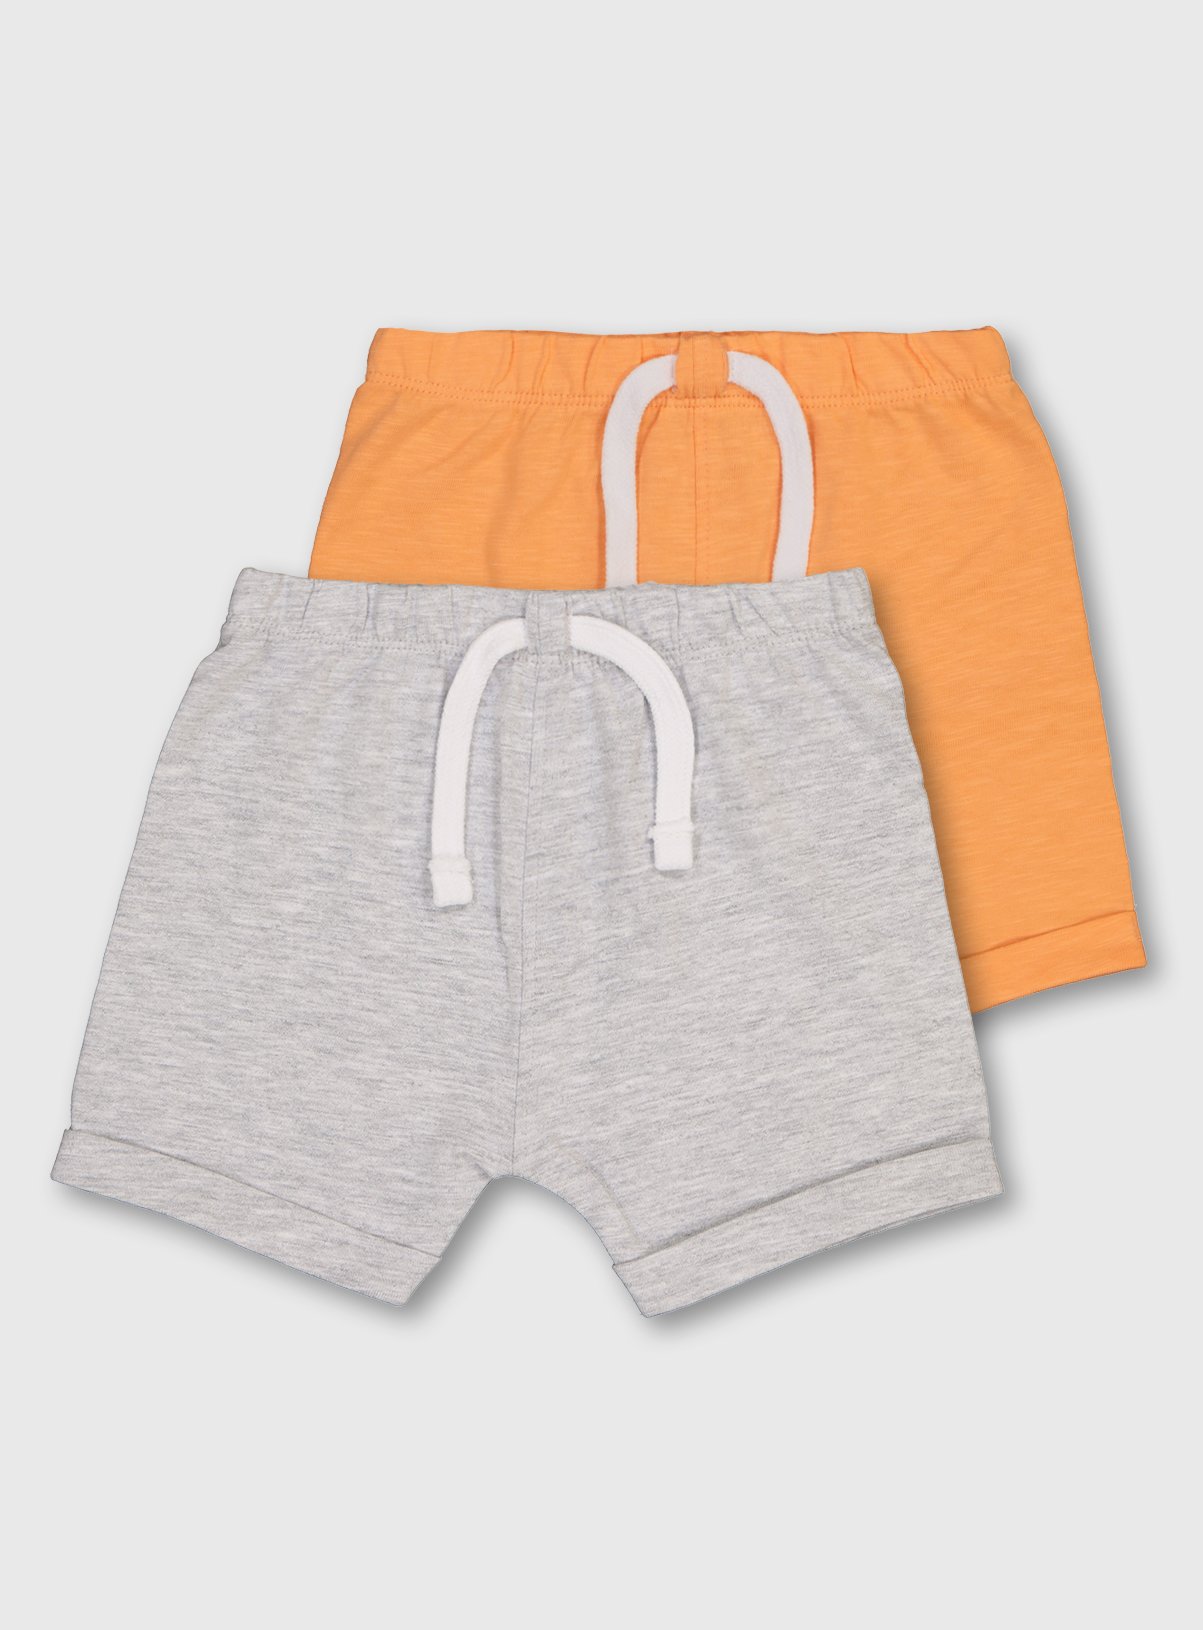 Grey & Orange Shorts 2 Pack Review